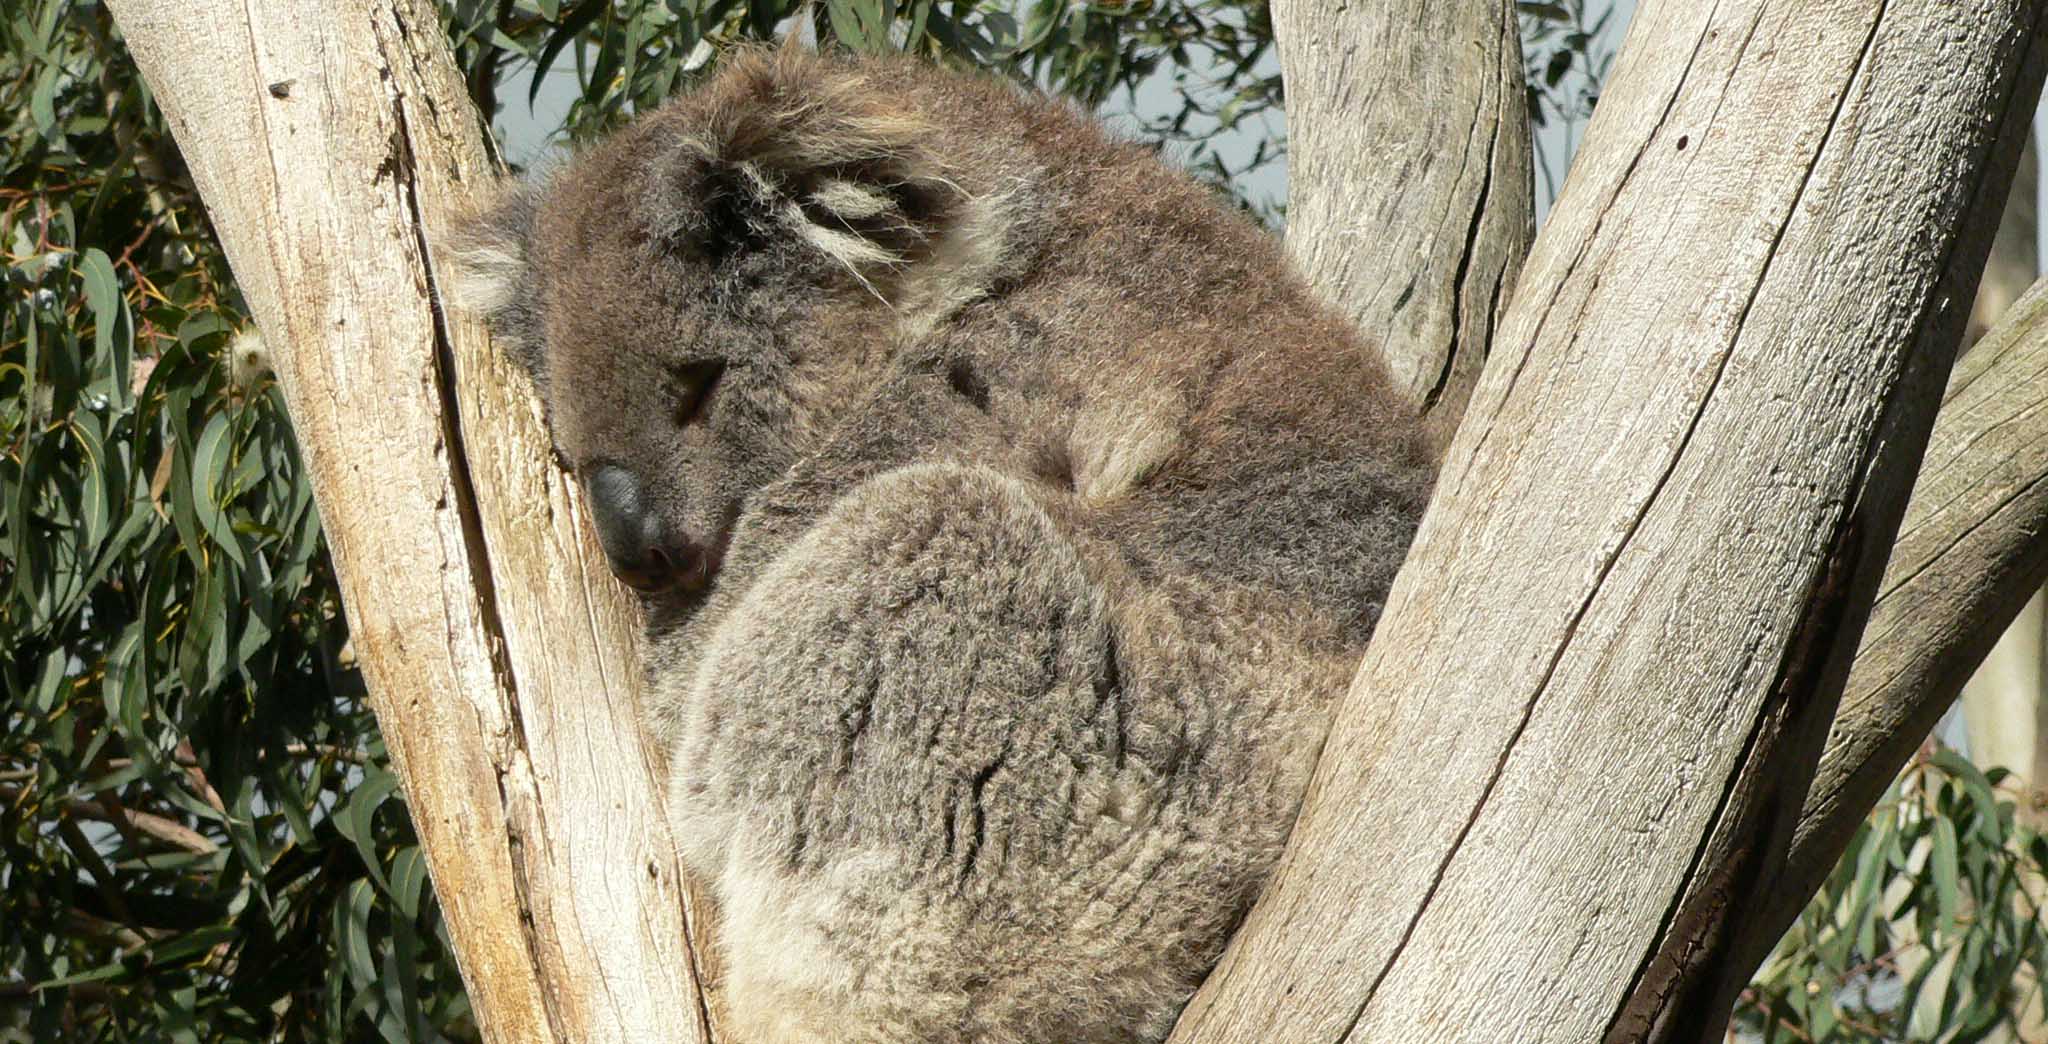 Australia koala